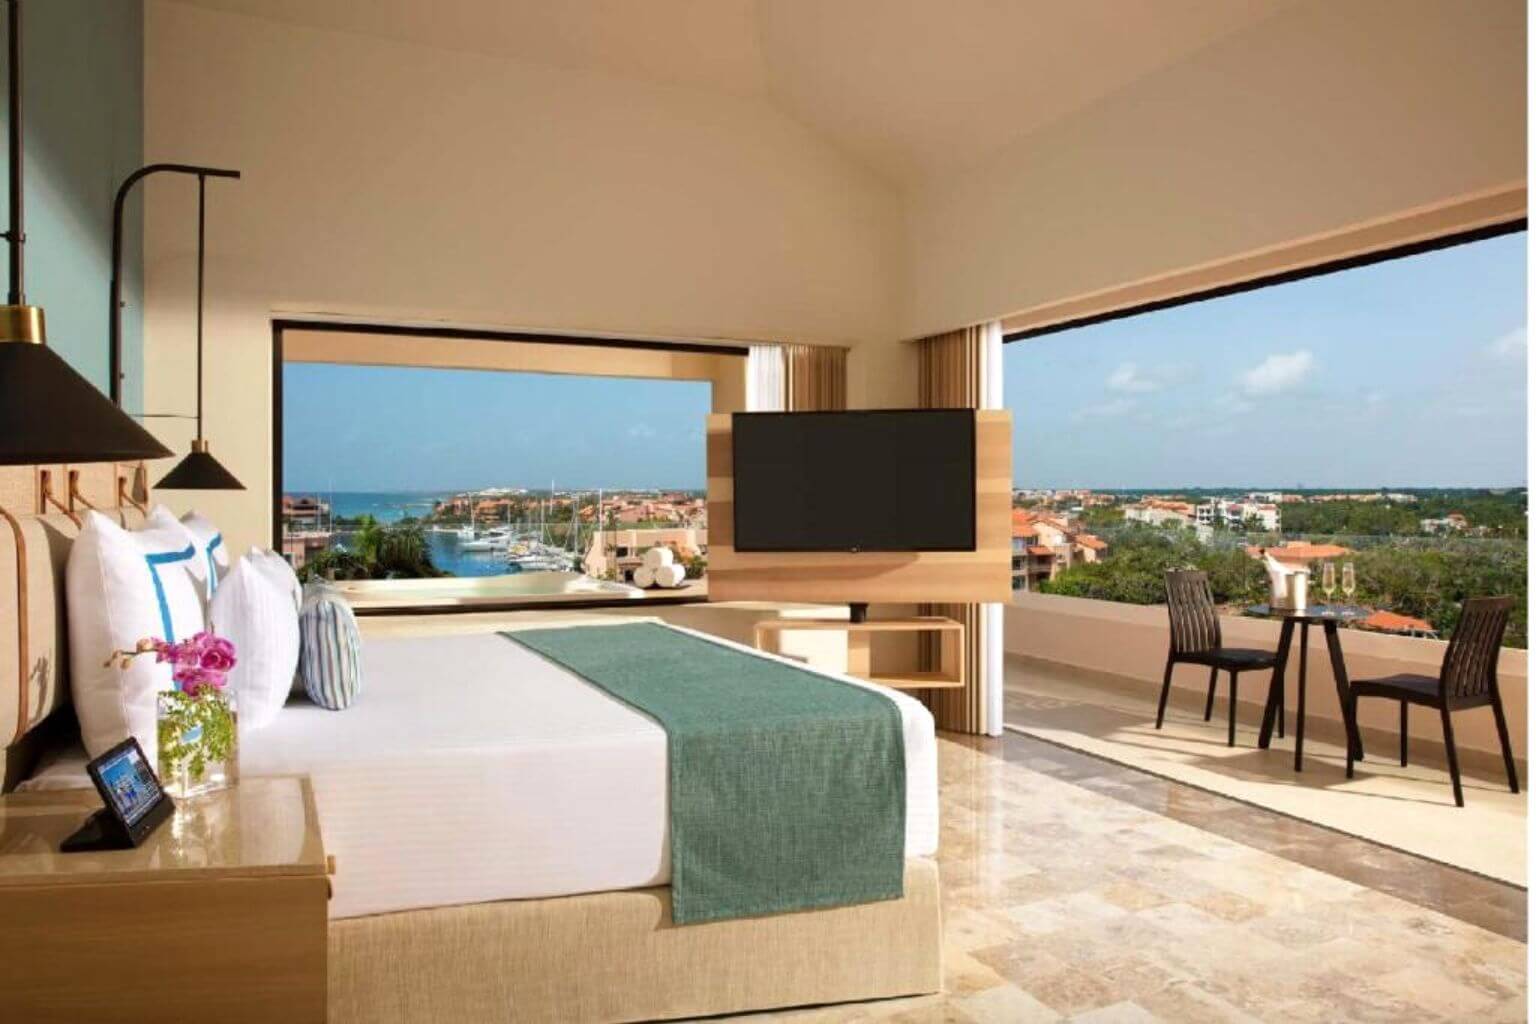 Re-furbished room at Dreams Puerto Aventuras Resort and Spa